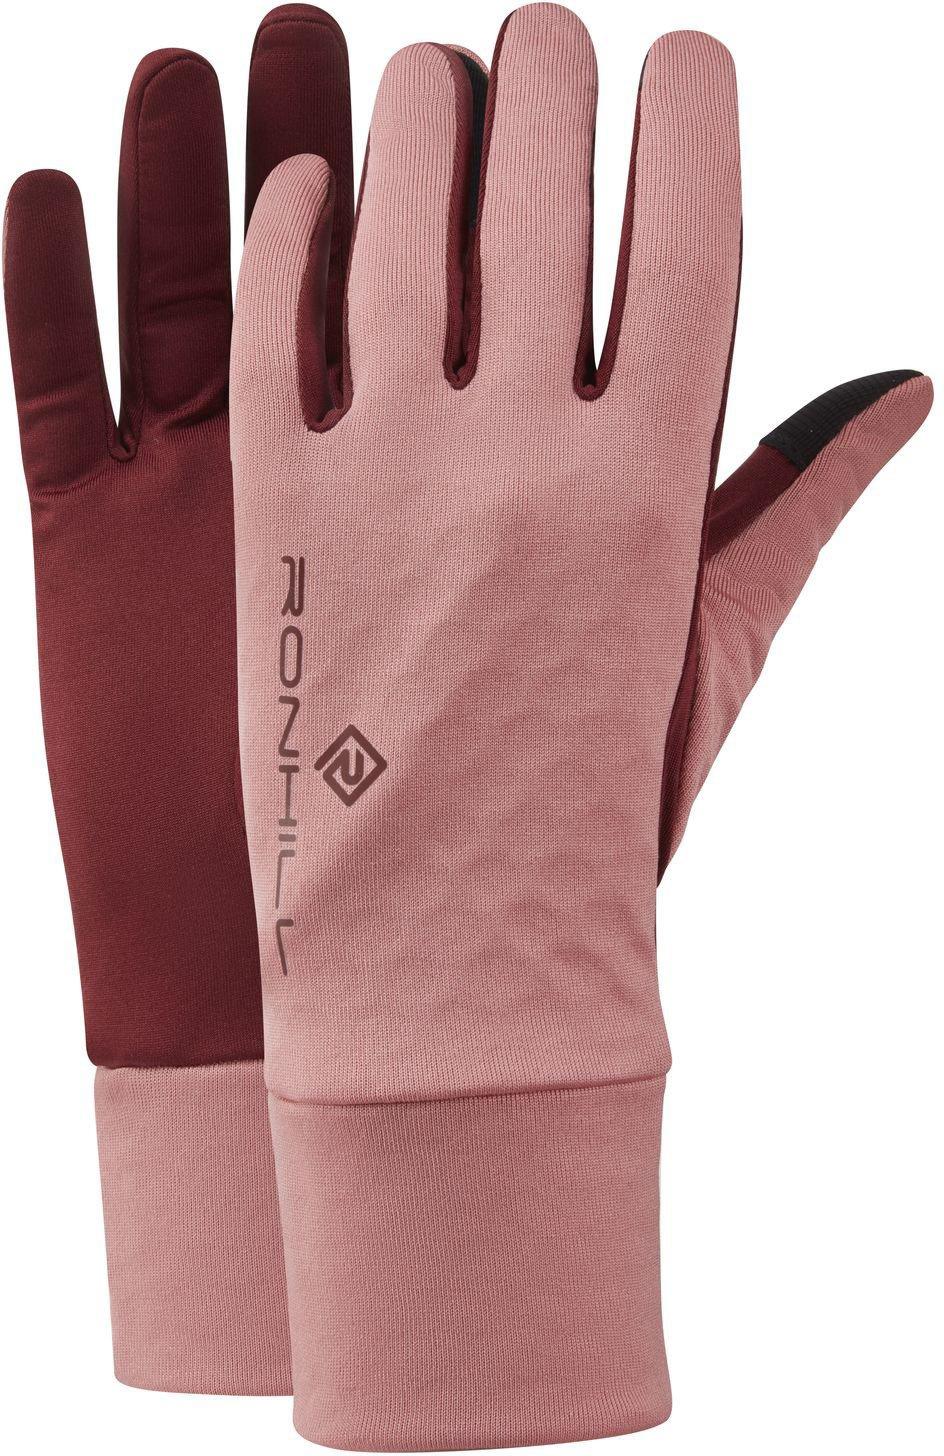 Ronhill Prism Glove M